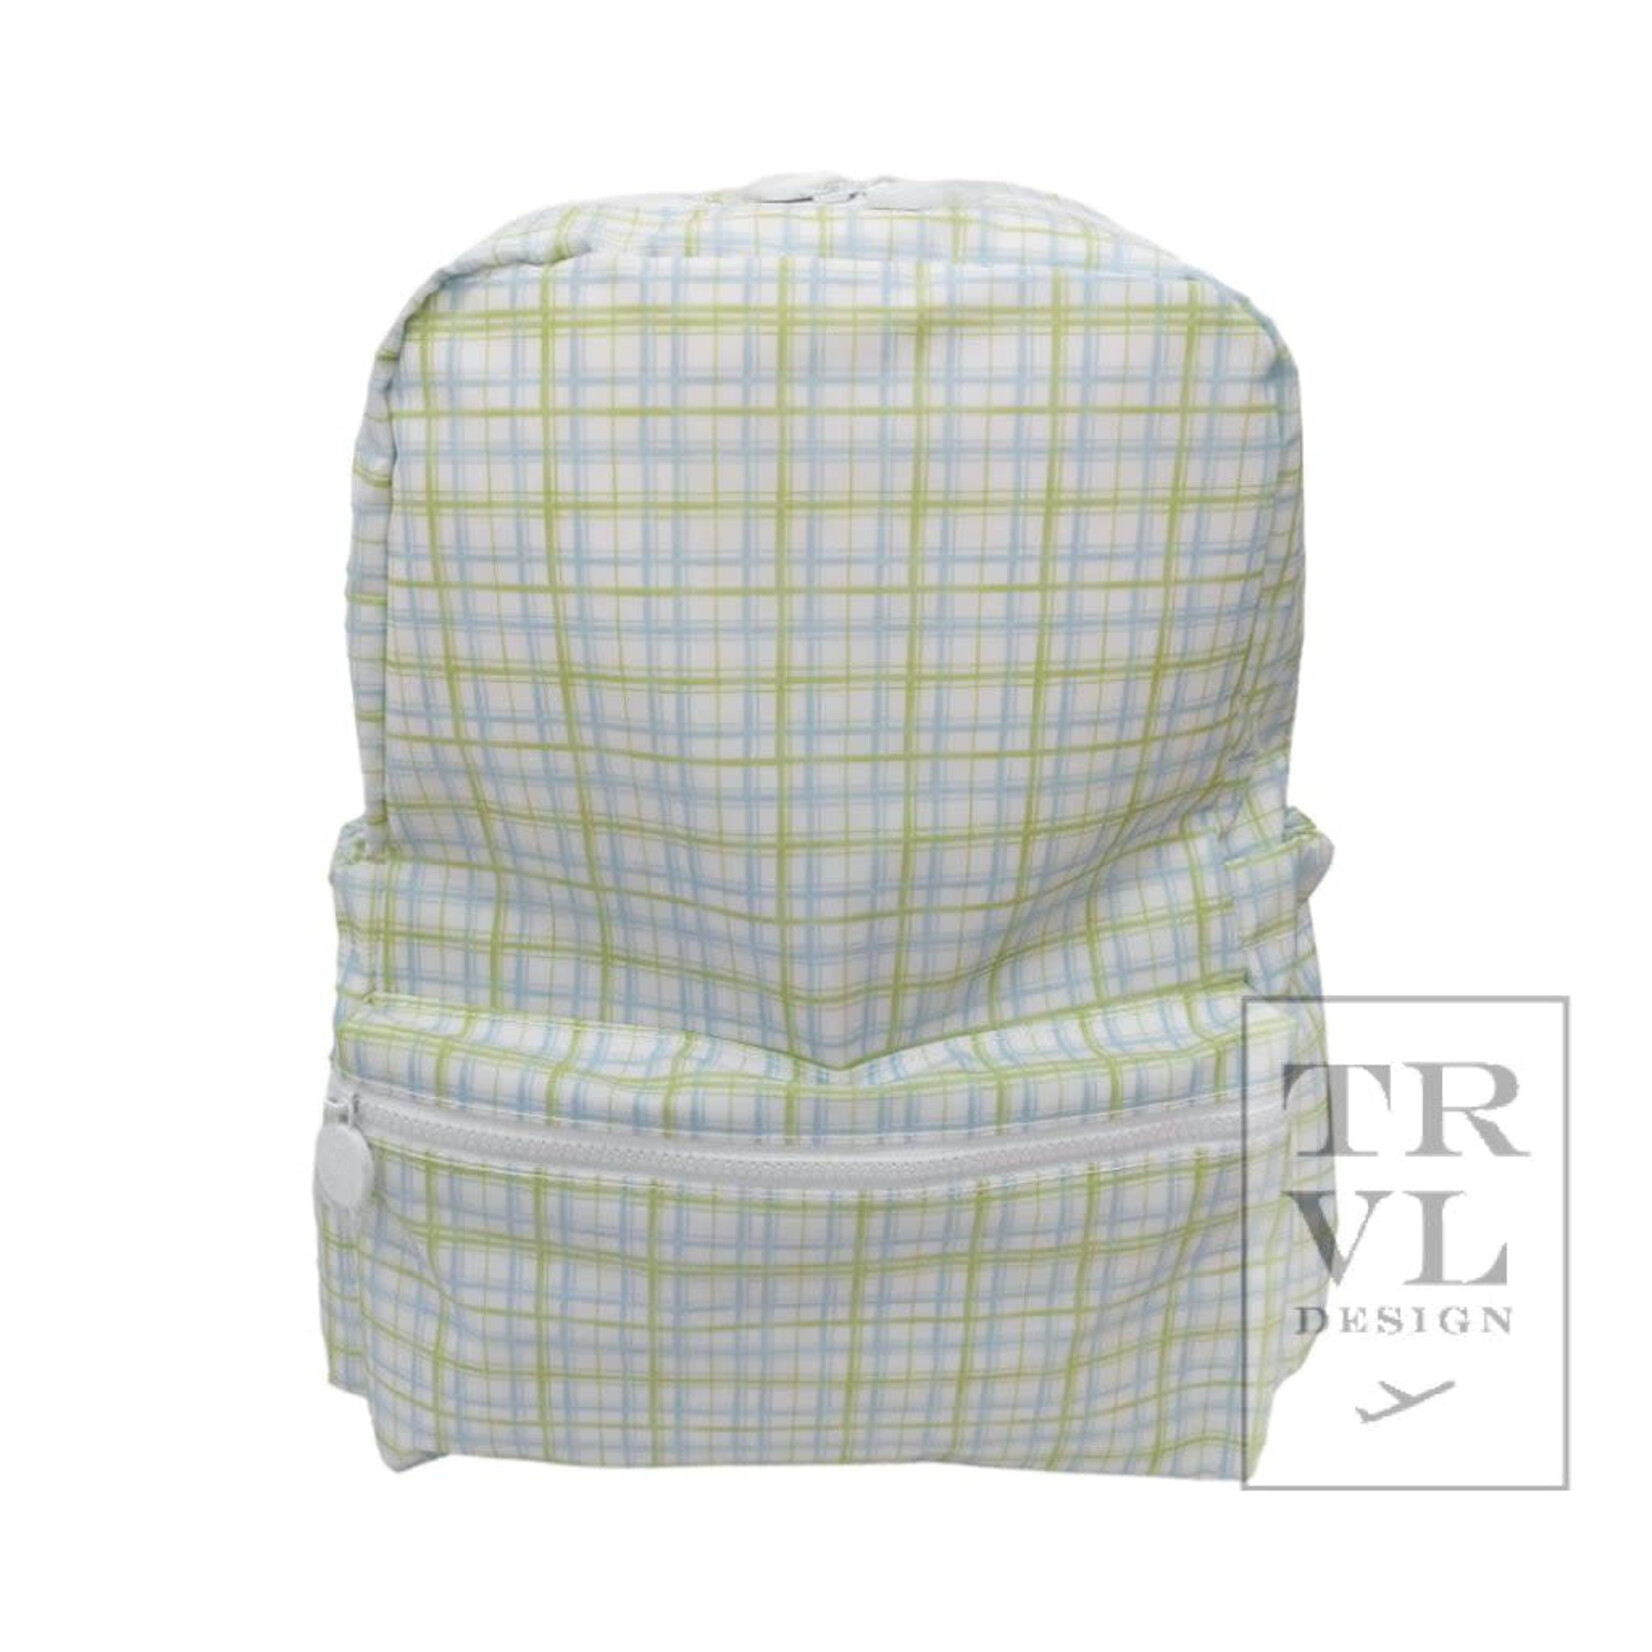 TRVL Design Backpacker - Classic Plaid Green